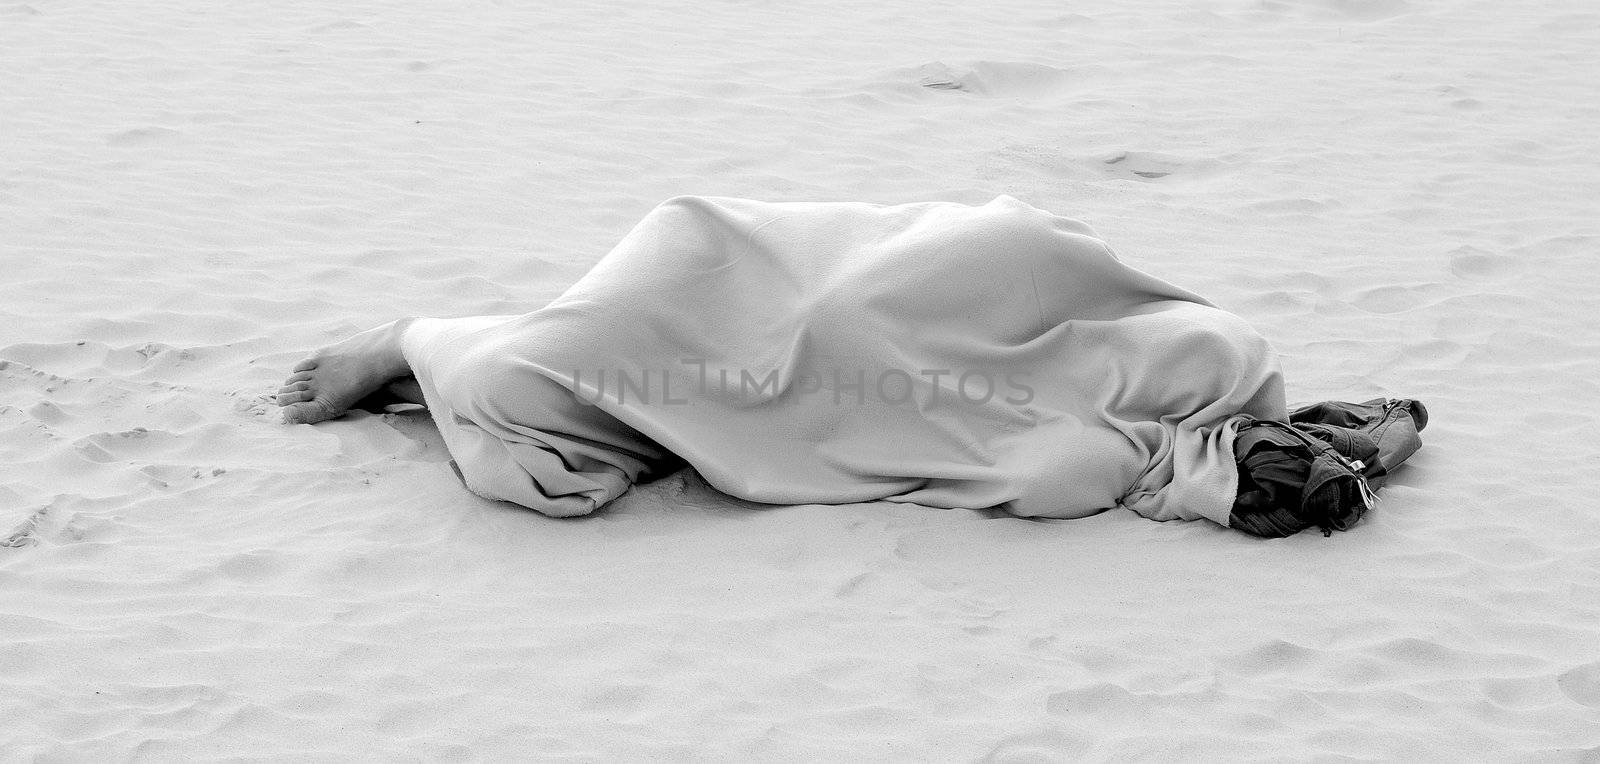 Homeless man sleeping on sea beach, monochrome image